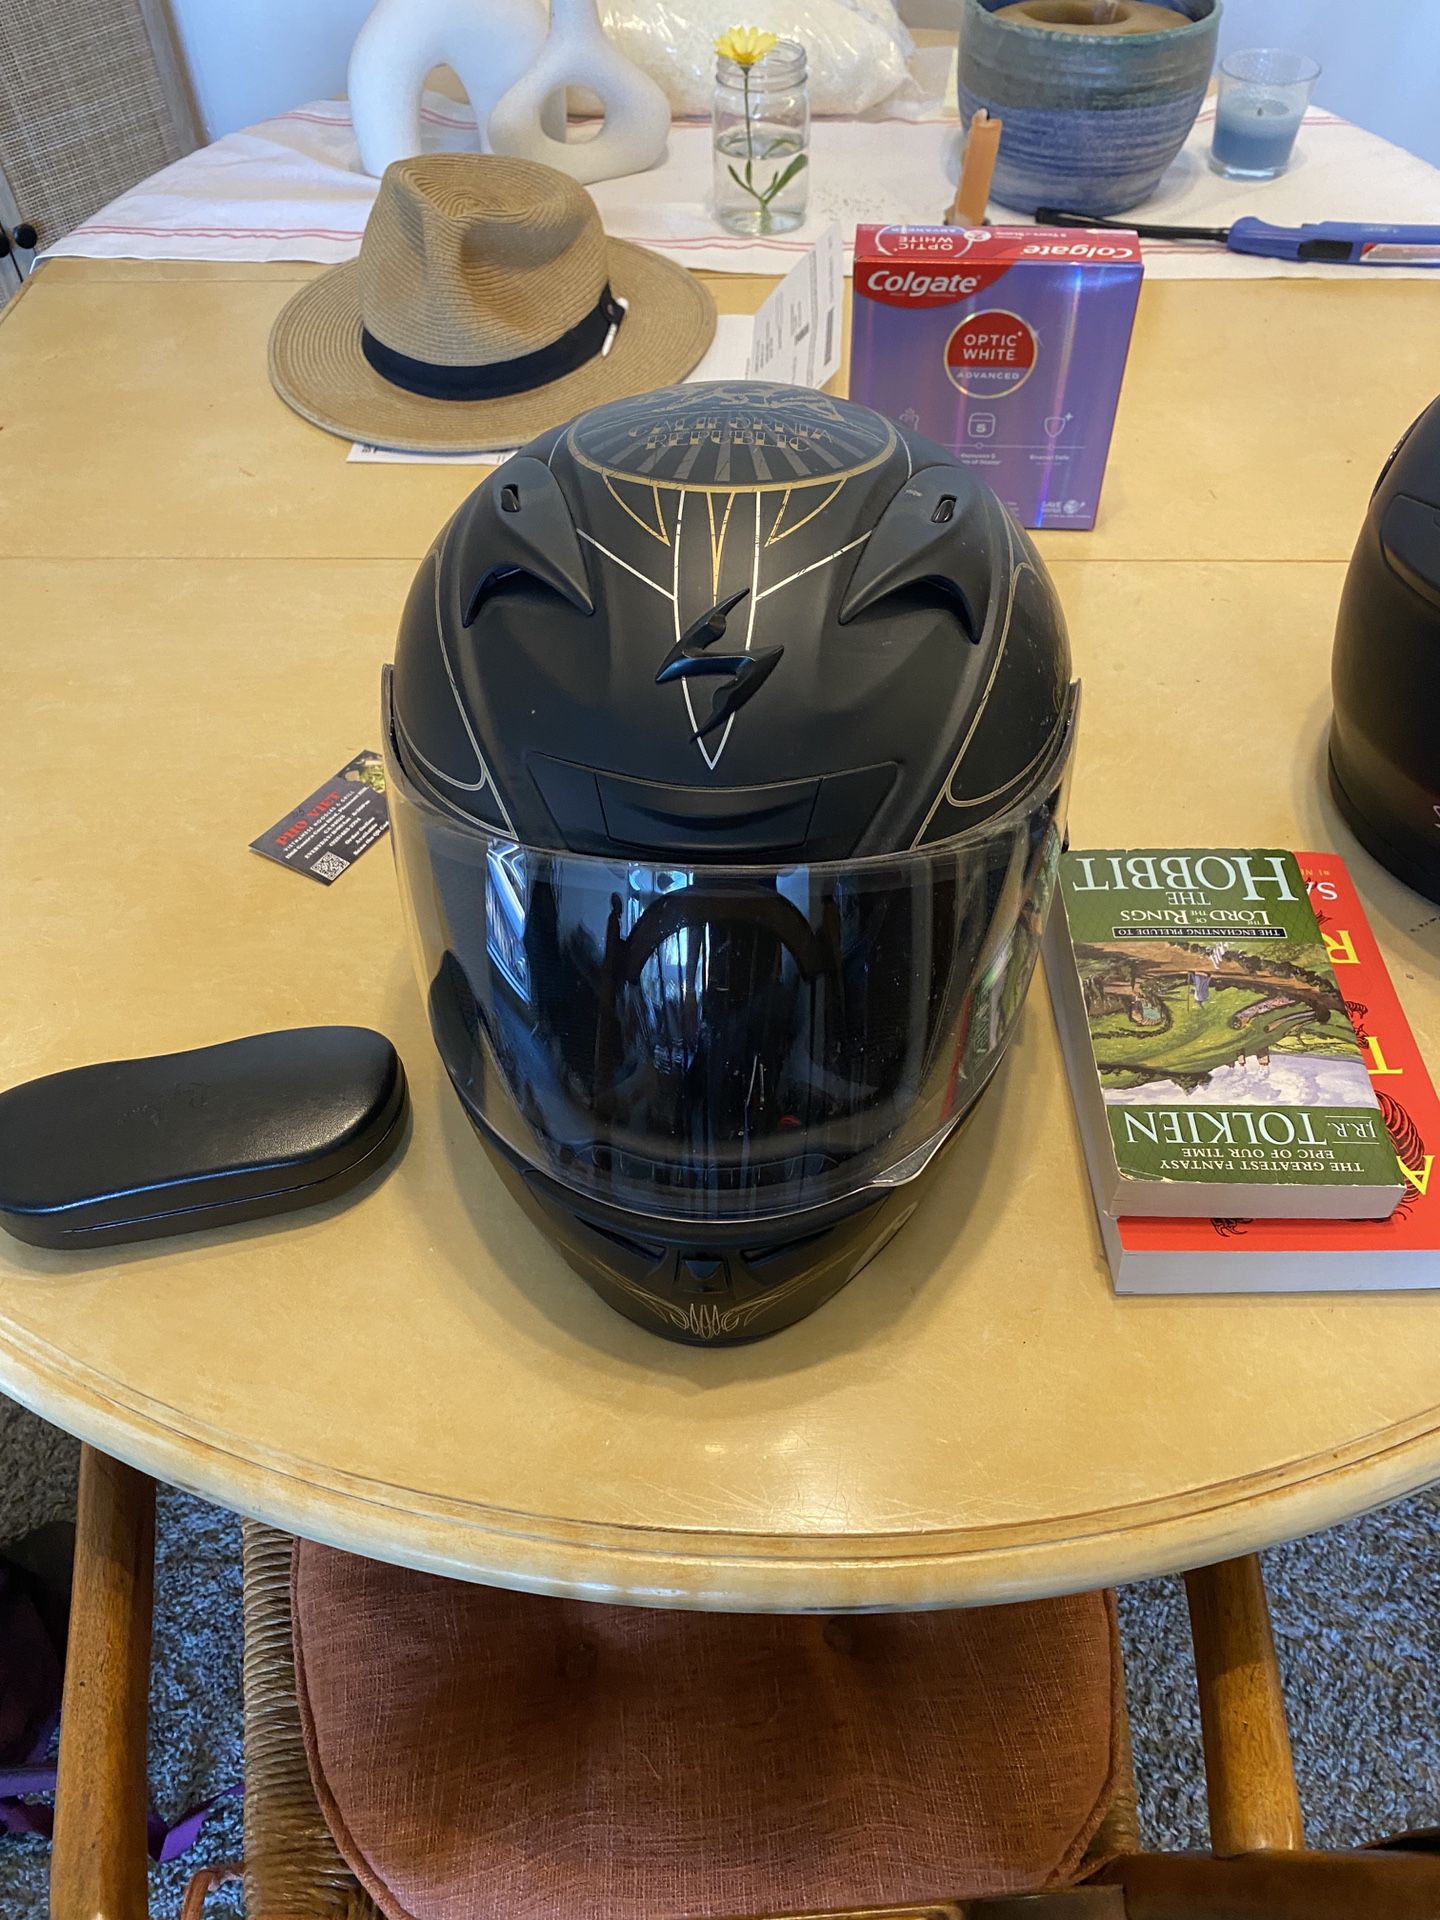 ScorpionEXO EXO-T520 Golden State Helmet (Matte Black)